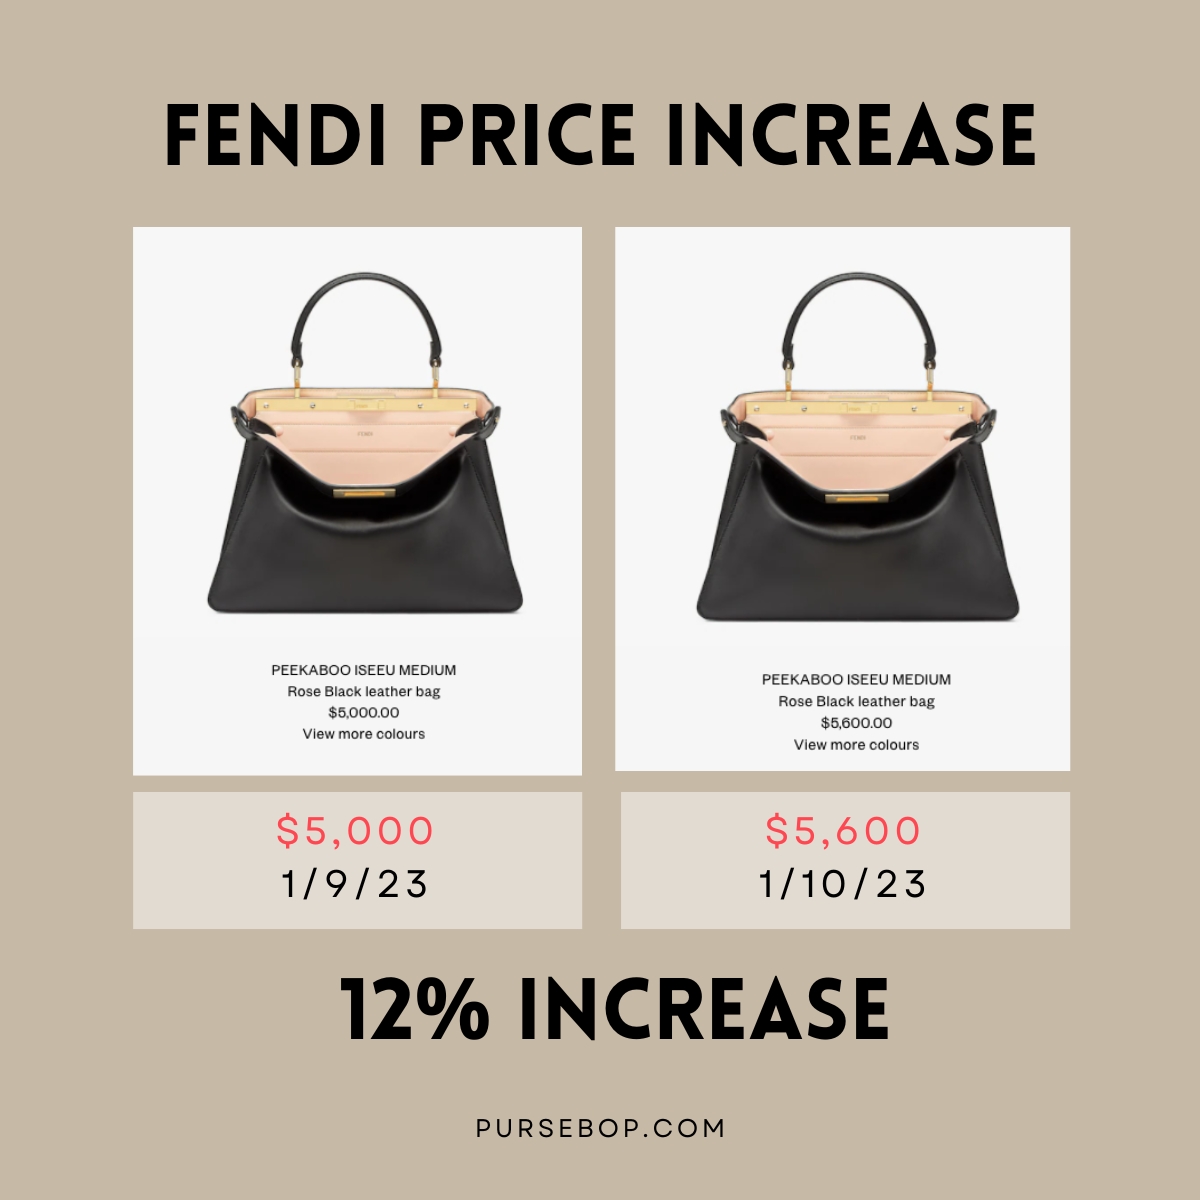 Fendi Price increase 2023 | Fendi Peekaboo ISeeU increase